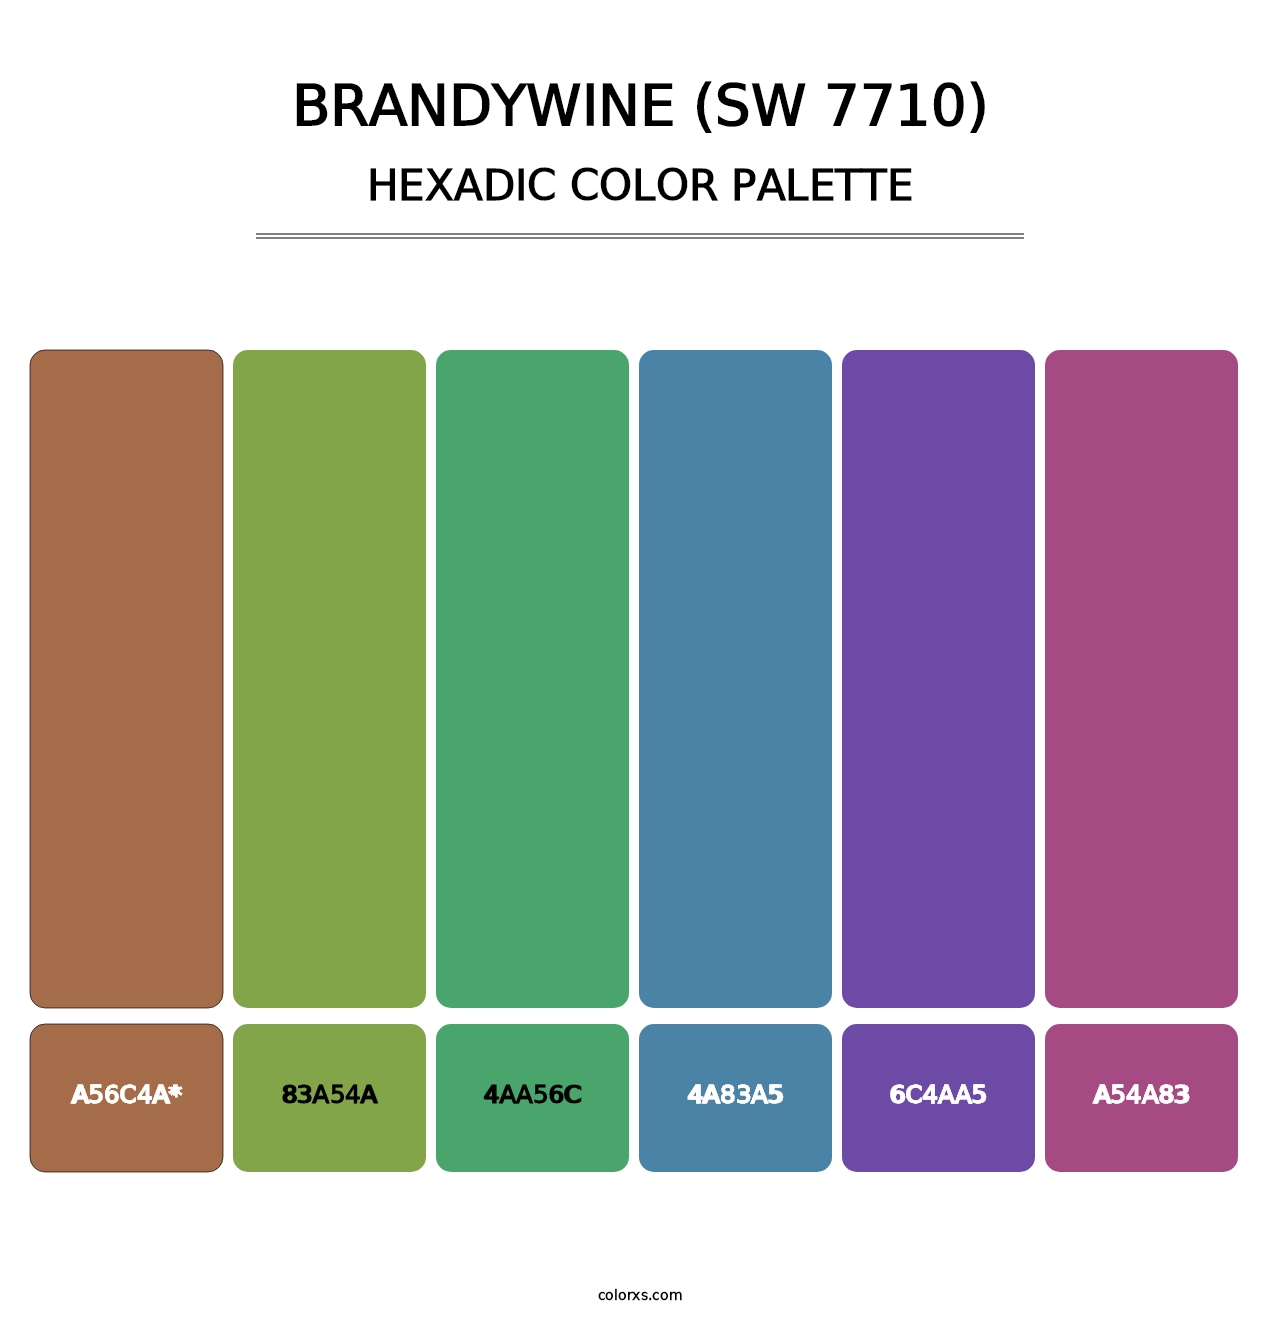 Brandywine (SW 7710) - Hexadic Color Palette